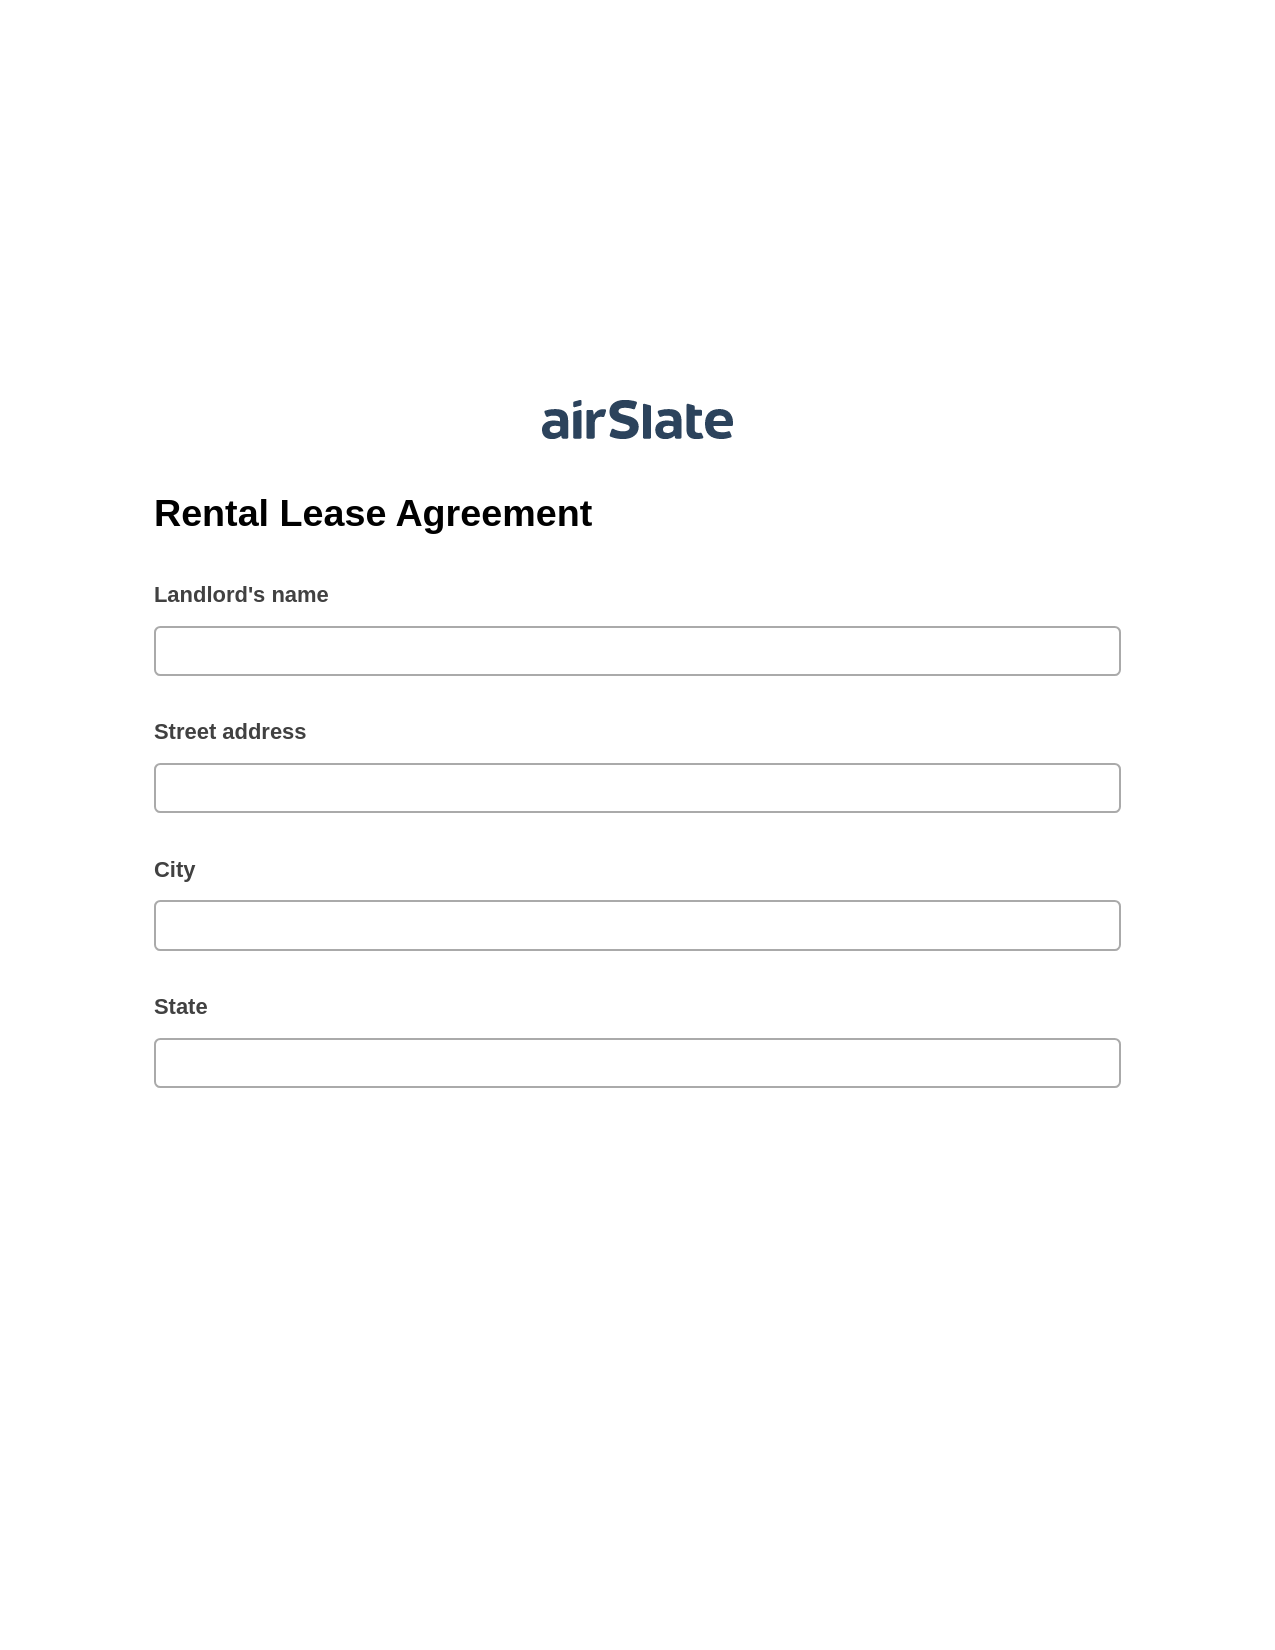 Multirole Rental Lease Agreement Pre-fill from Google Sheet Dropdown Options Bot, Invoke Salesforce Process Bot, Email Notification Postfinish Bot